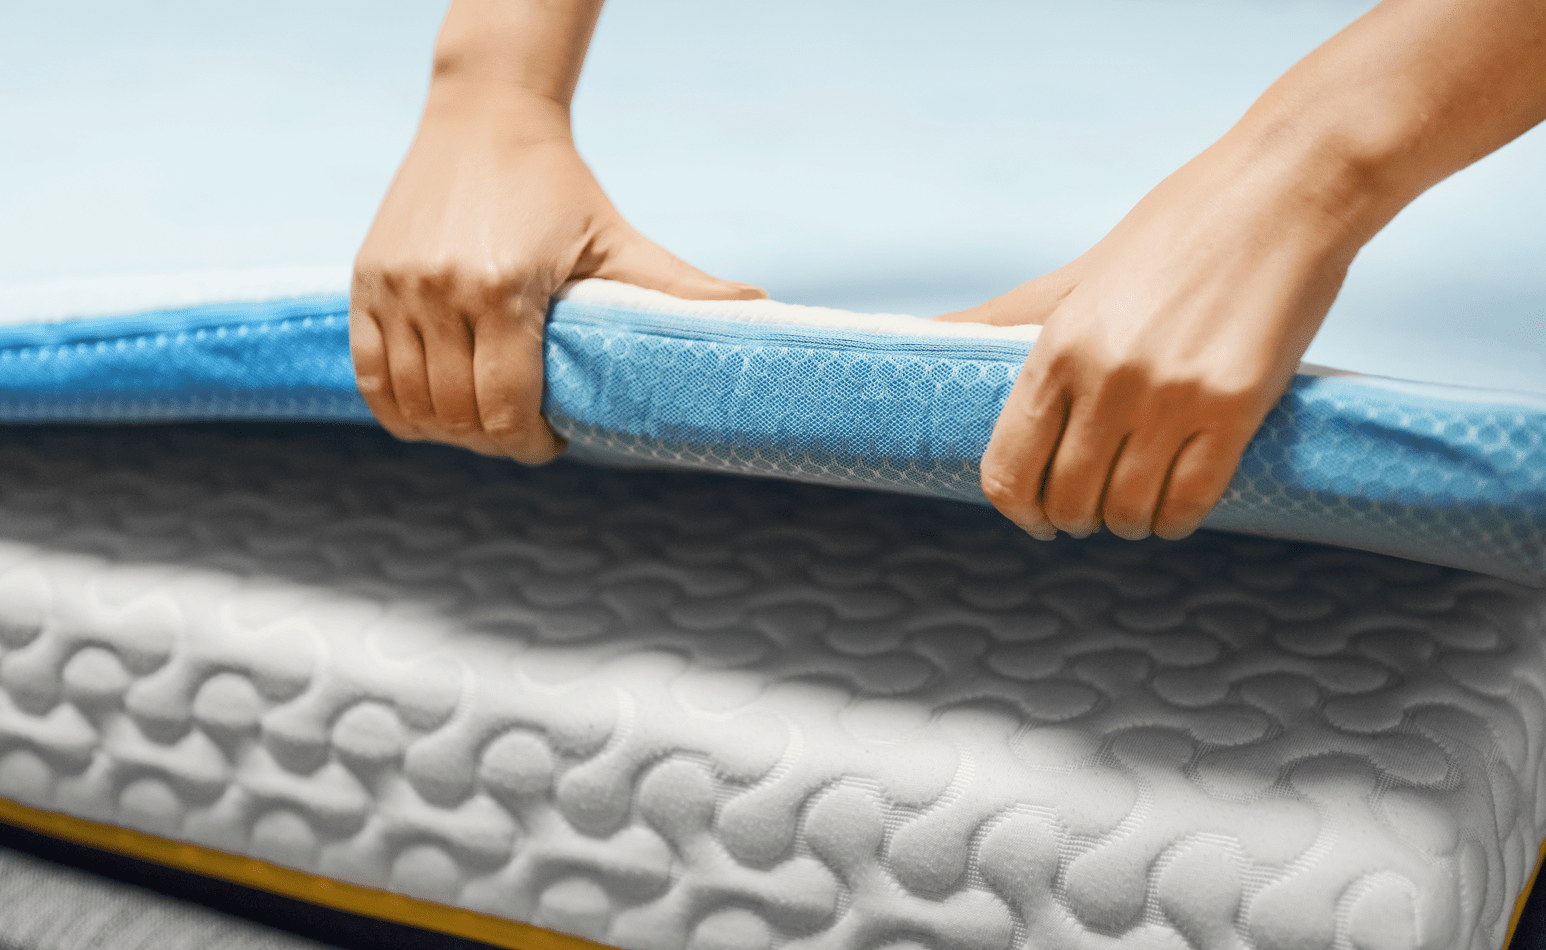 How often should you wash a mattress topper